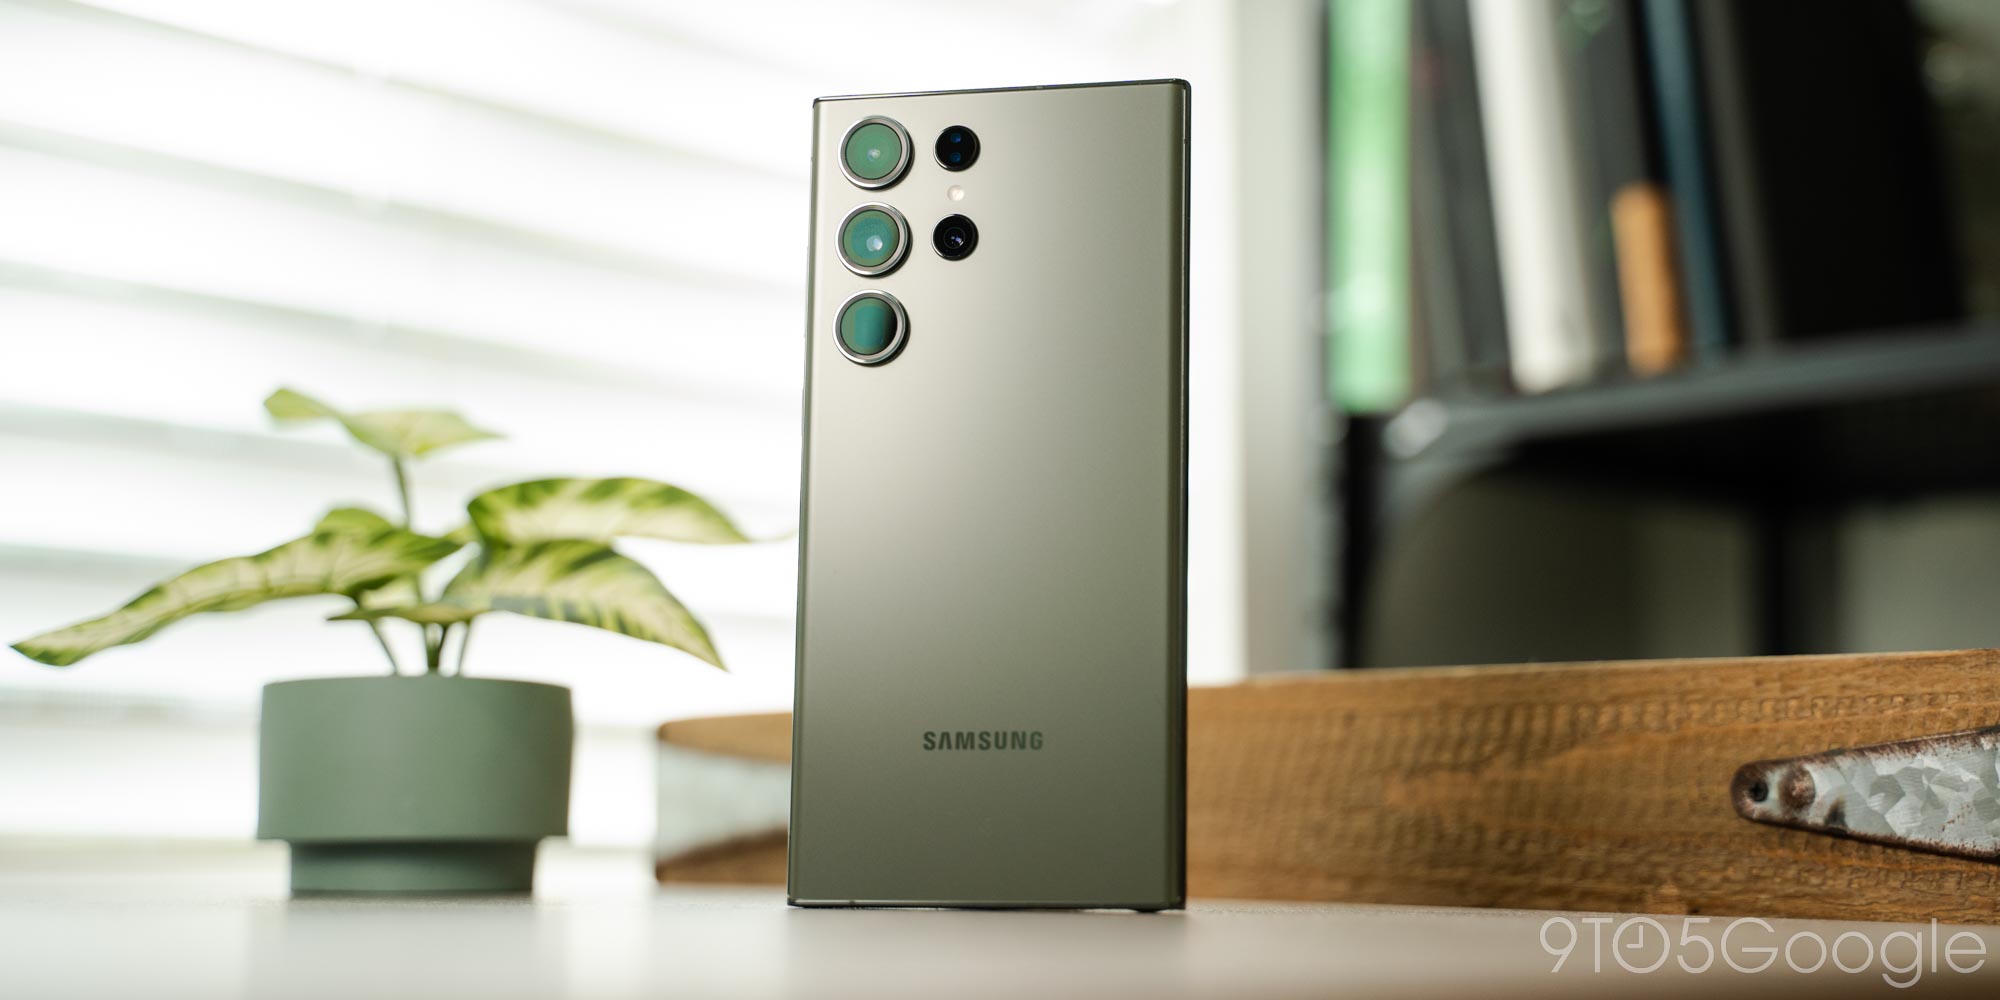 Samsung Galaxy Android 14 update - SamMobile